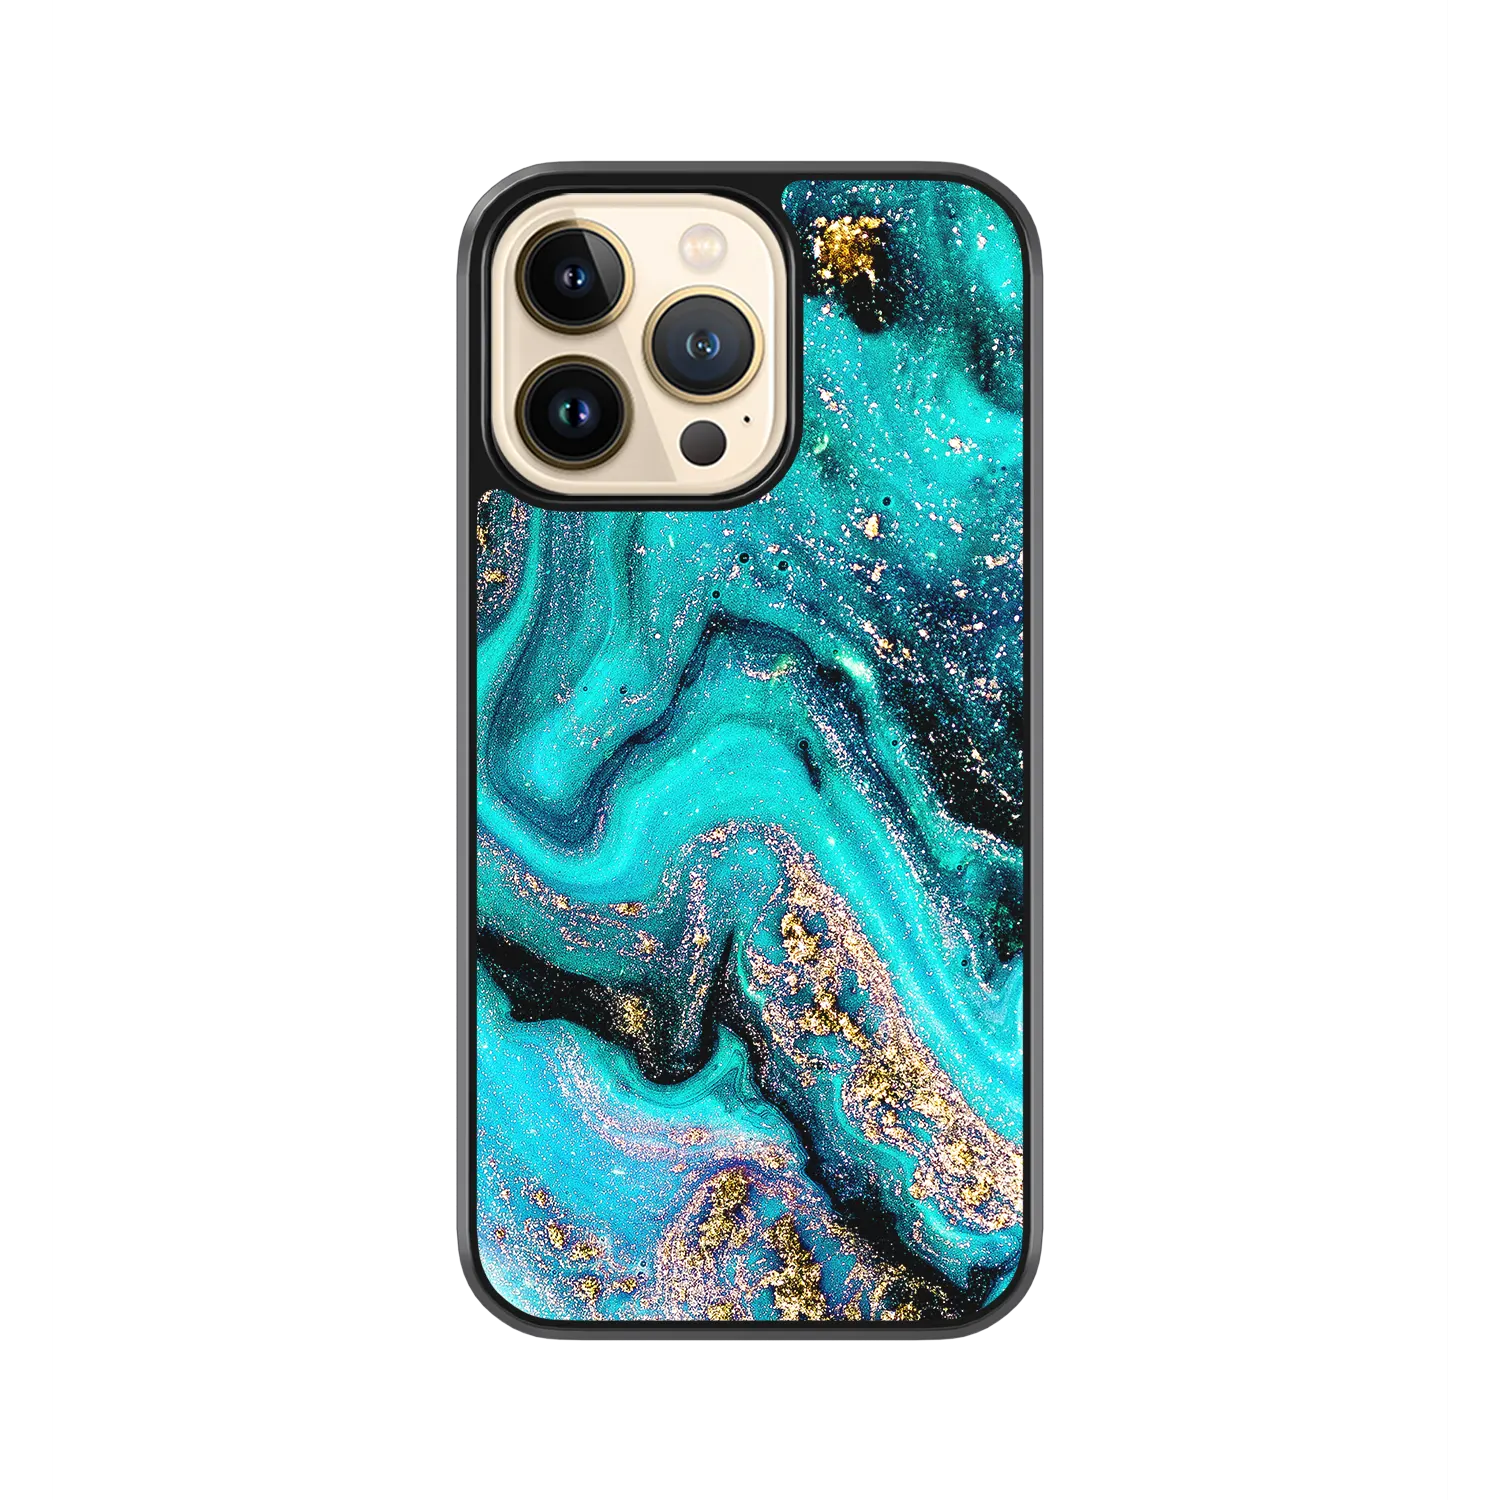 Tourquoise iPhone 12 Pro max Case